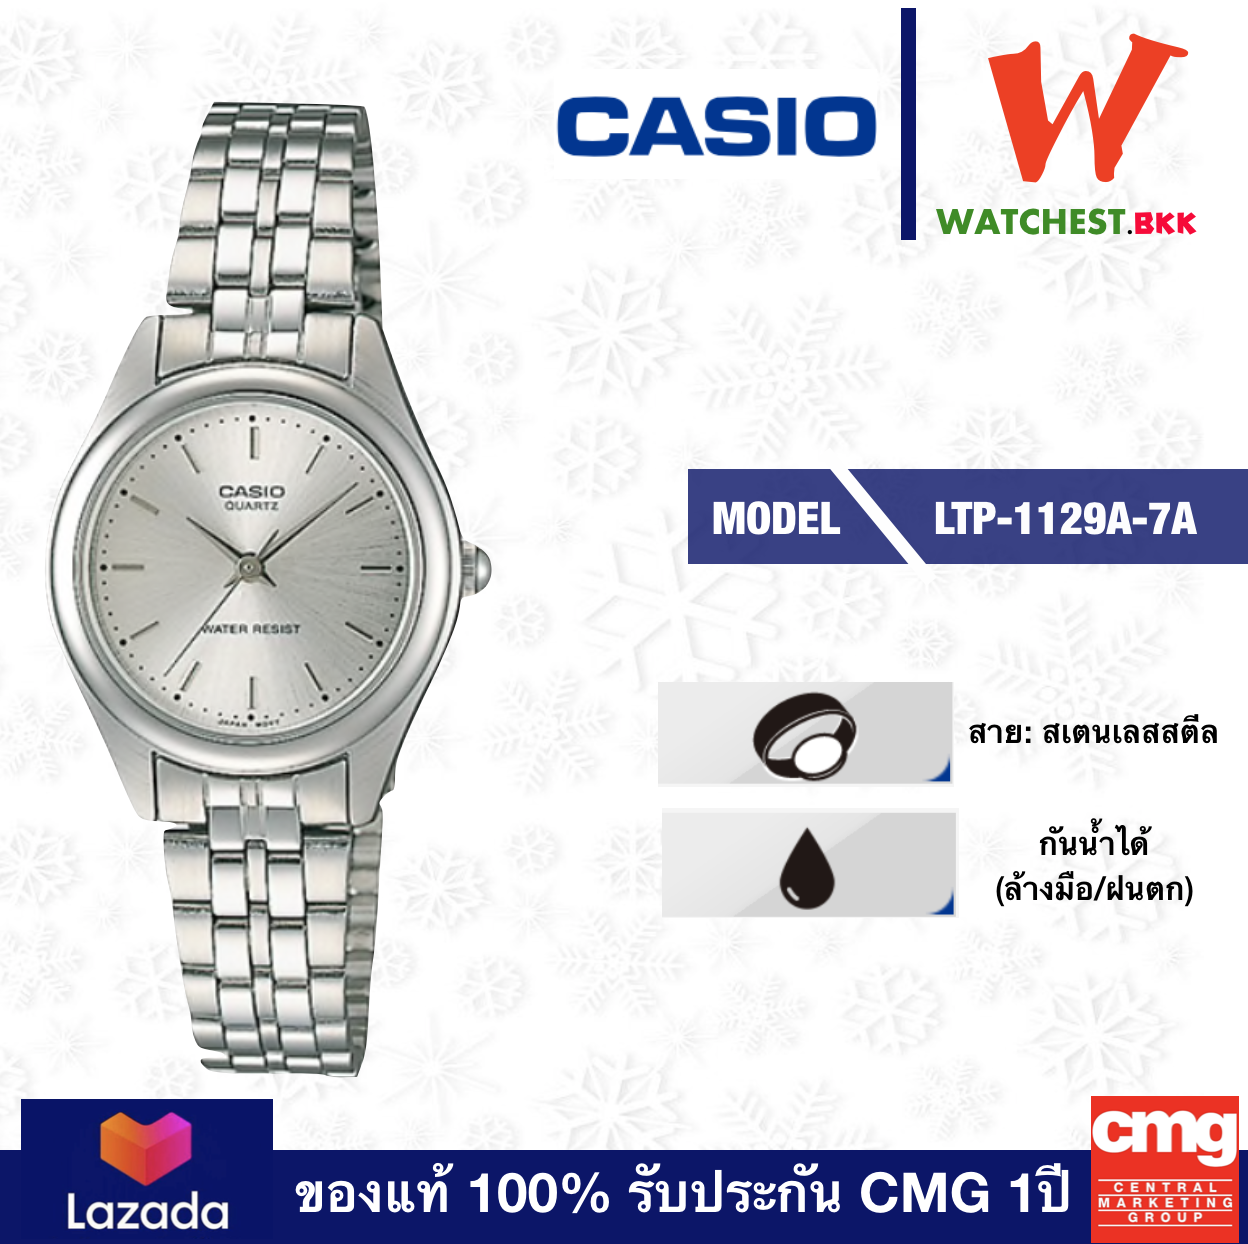 casio นาฬิกาข้อมือผู้หญิง สายสเตนเลส รุ่น LTP-1129A-7A, คาสิโอ LTP1129, LTP-1129 สายเหล็ก ตัวล็อกบานพับ (watchestbkk คาสิโอ้ แท้ ของแท้100% ประกัน CMG)